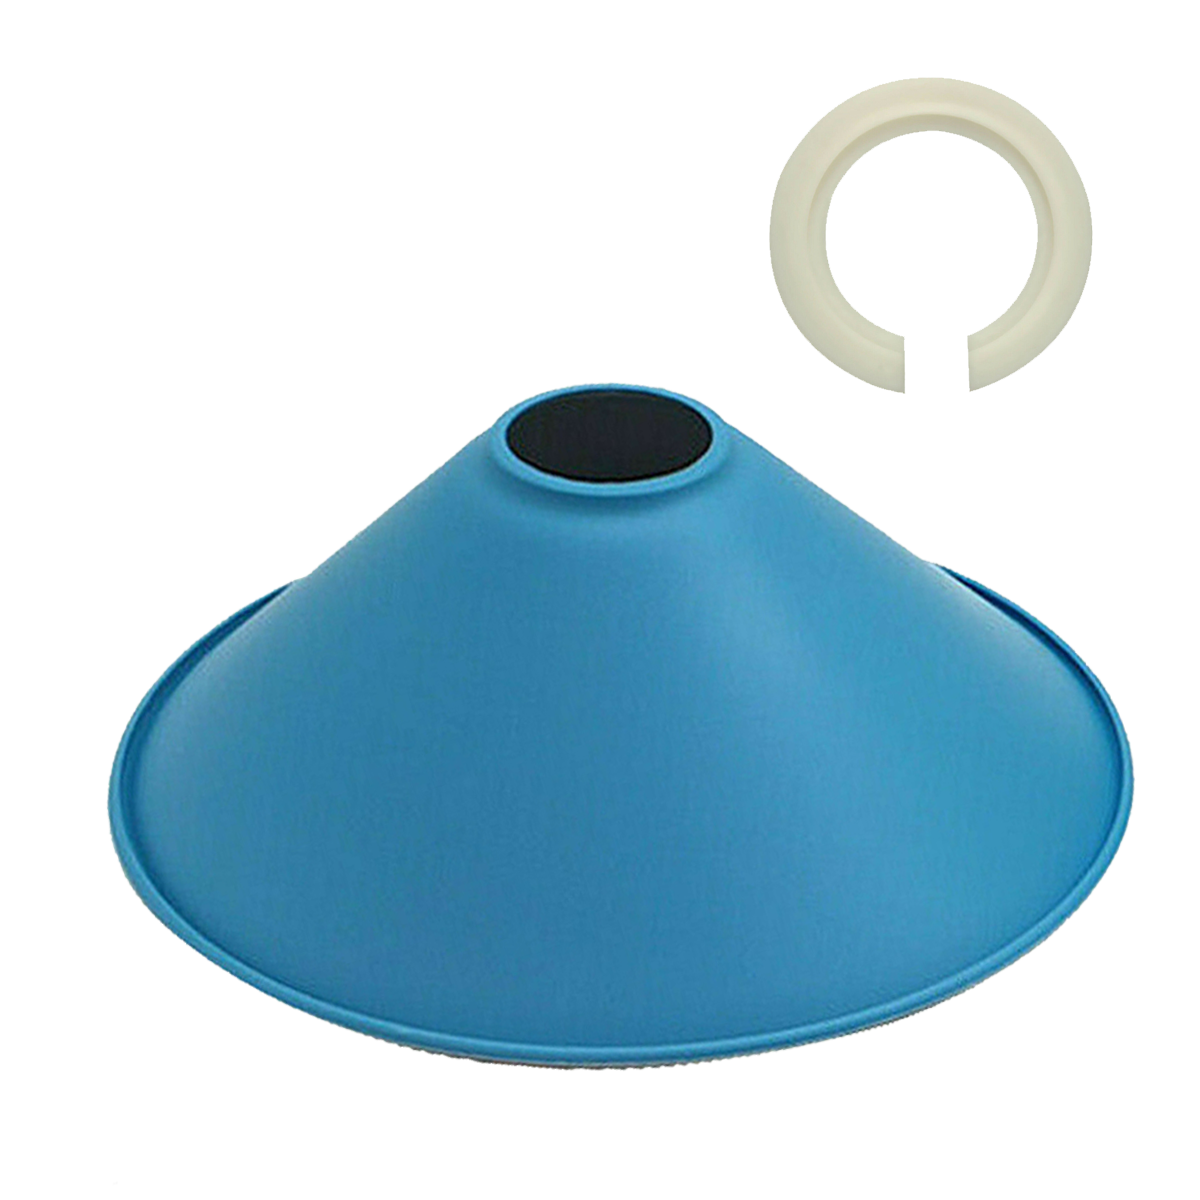 Modern Ceiling Pendant Light Shades Blue Colour Lamp Shades Easy Fit~1104 - LEDSone UK Ltd